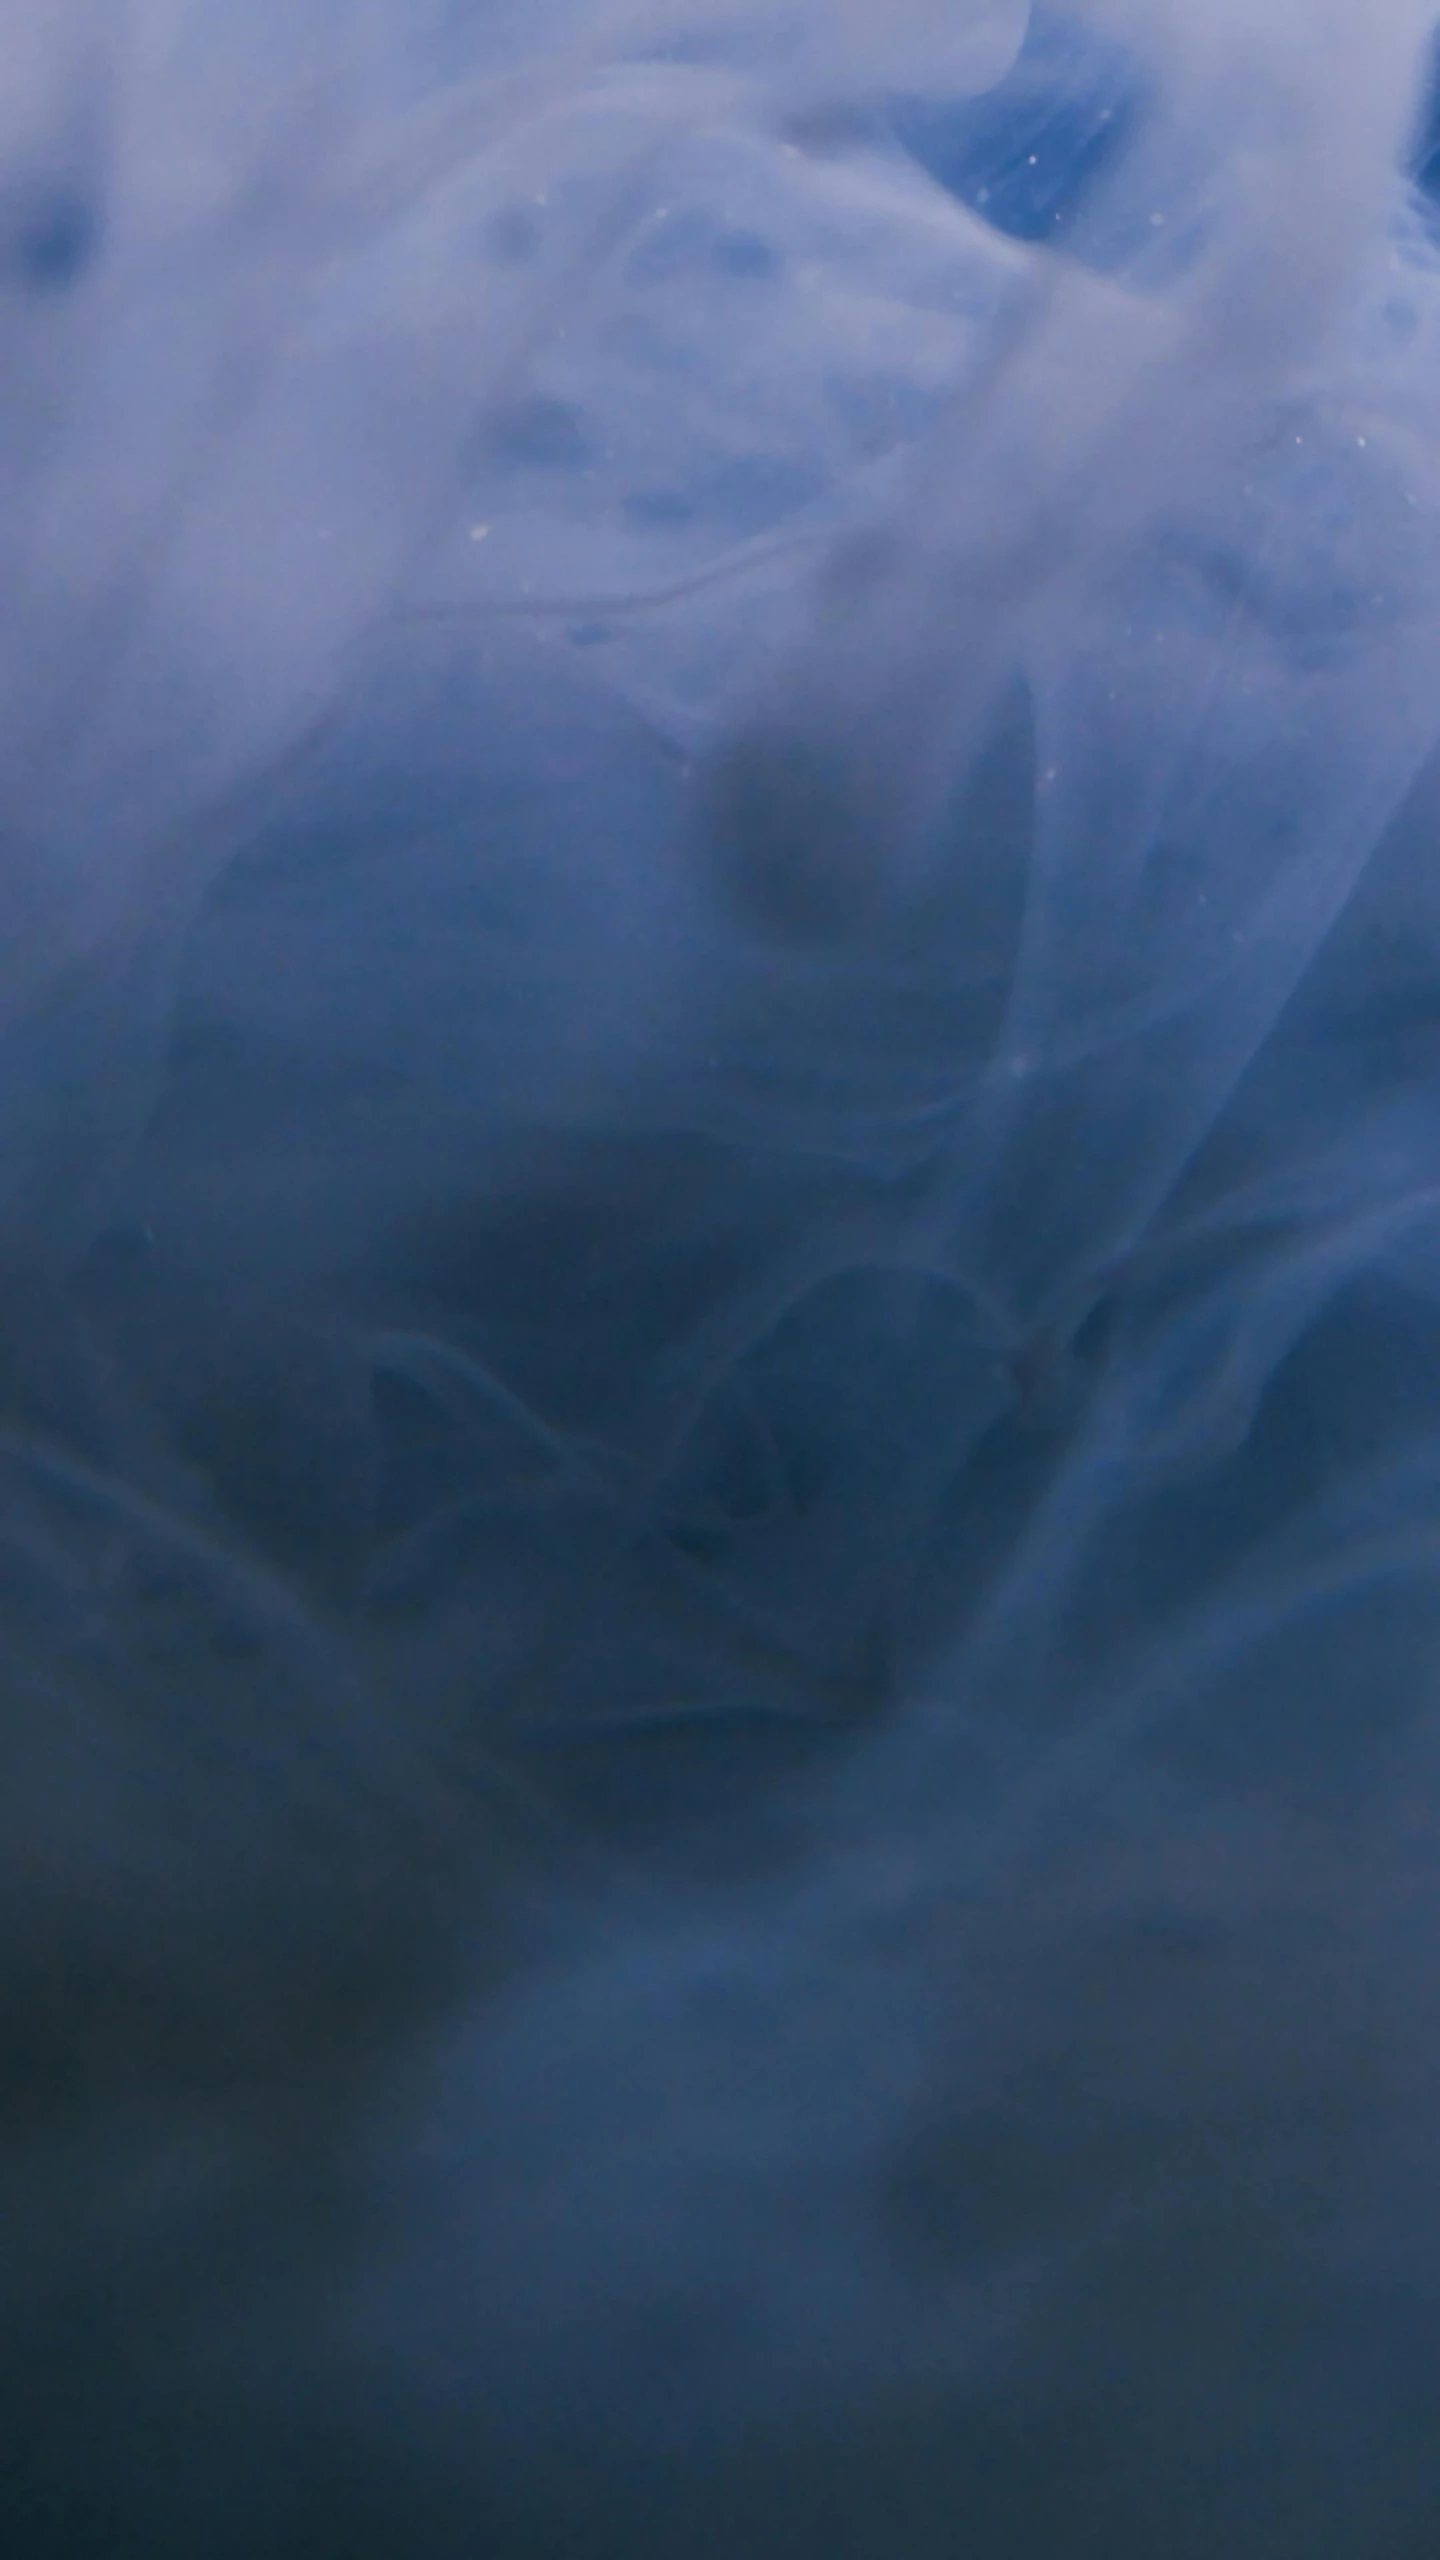 an airplane flying through a cloudy blue sky, an album cover, inspired by Kim Keever, lyrical abstraction, leonardo davinci detail, blue fur, (mist), 15081959 21121991 01012000 4k